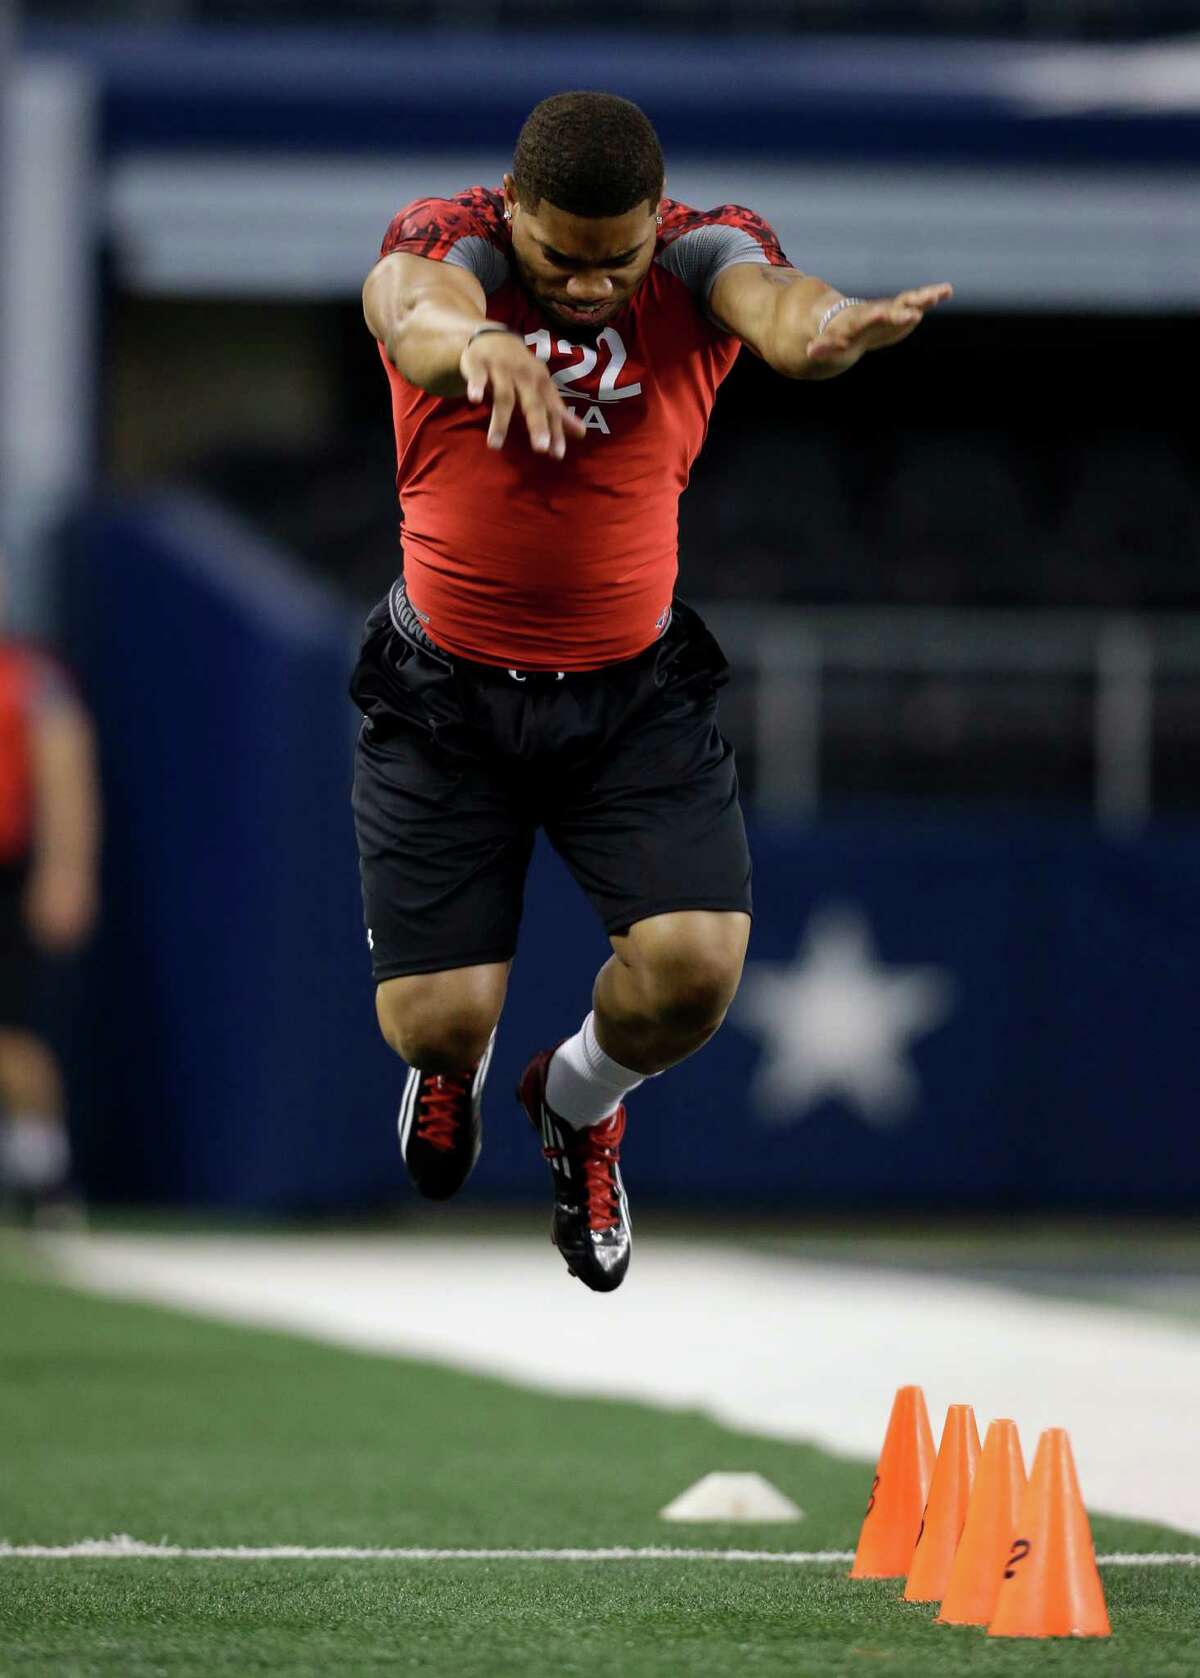 B.J. Daniels leaps forward during the broad jump at the NFL super regional football combine Monday, April 8, 2013, in Arlington, Texas. (AP Photo/Tony Gutierrez)